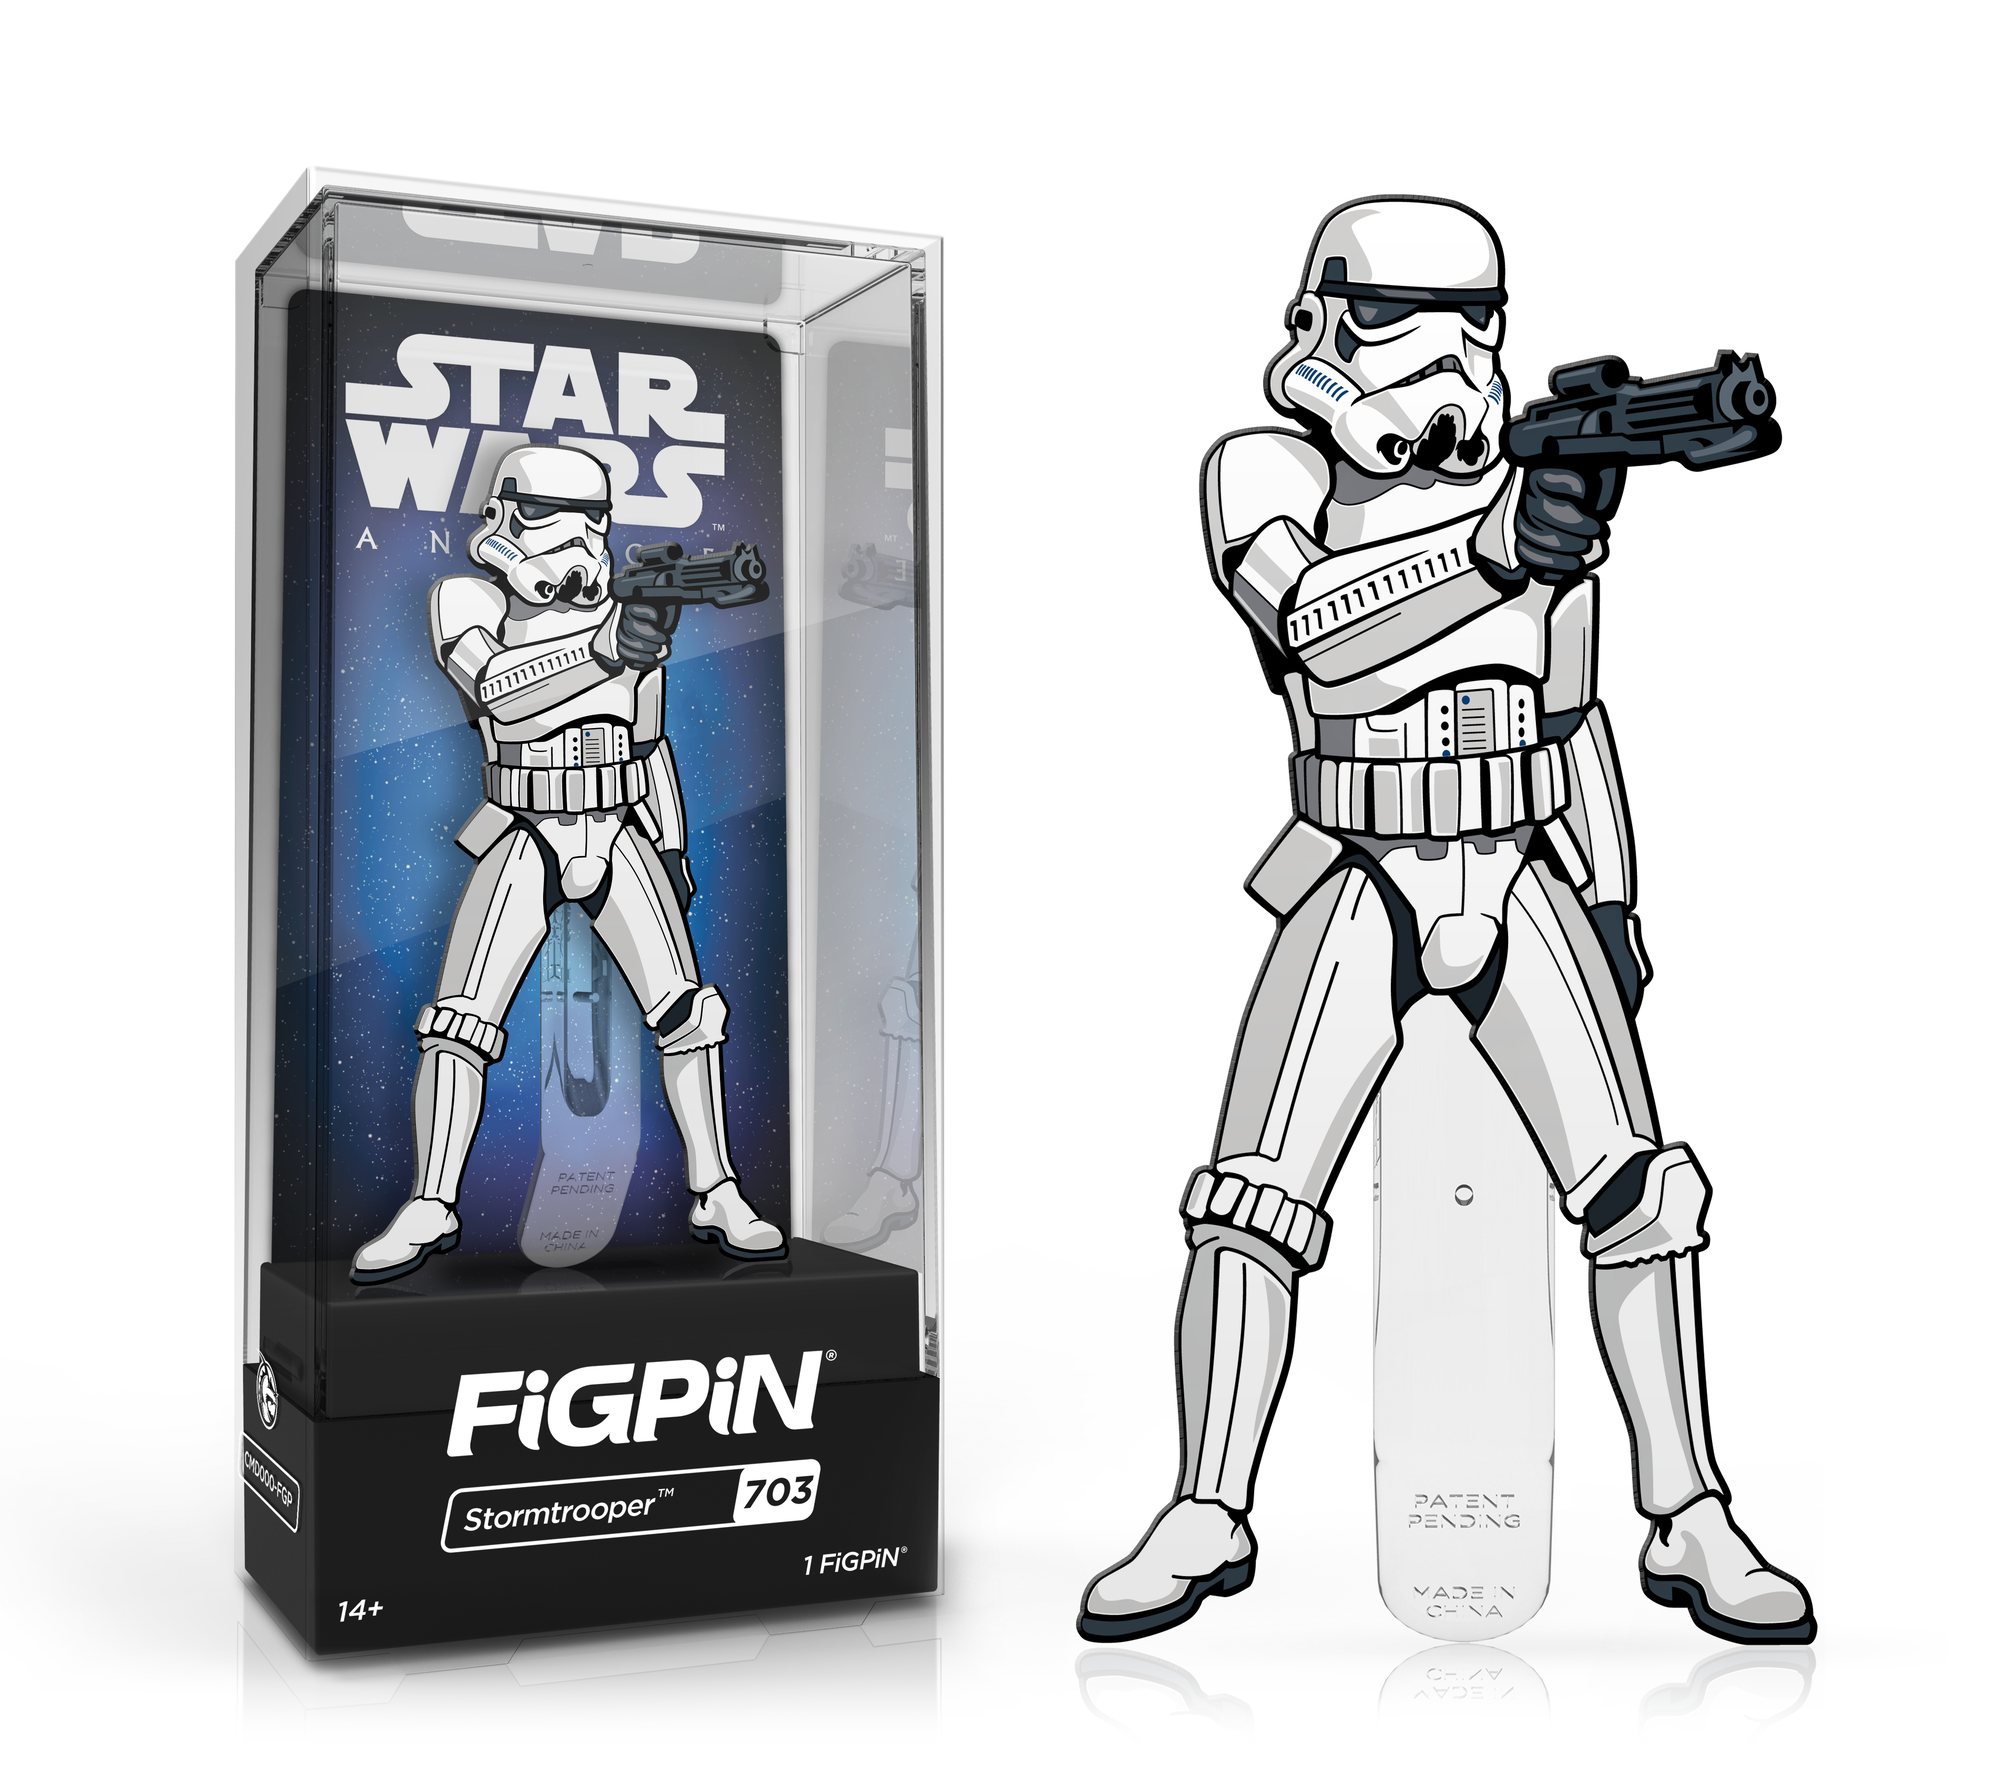 Figpin: Stormtrooper 703